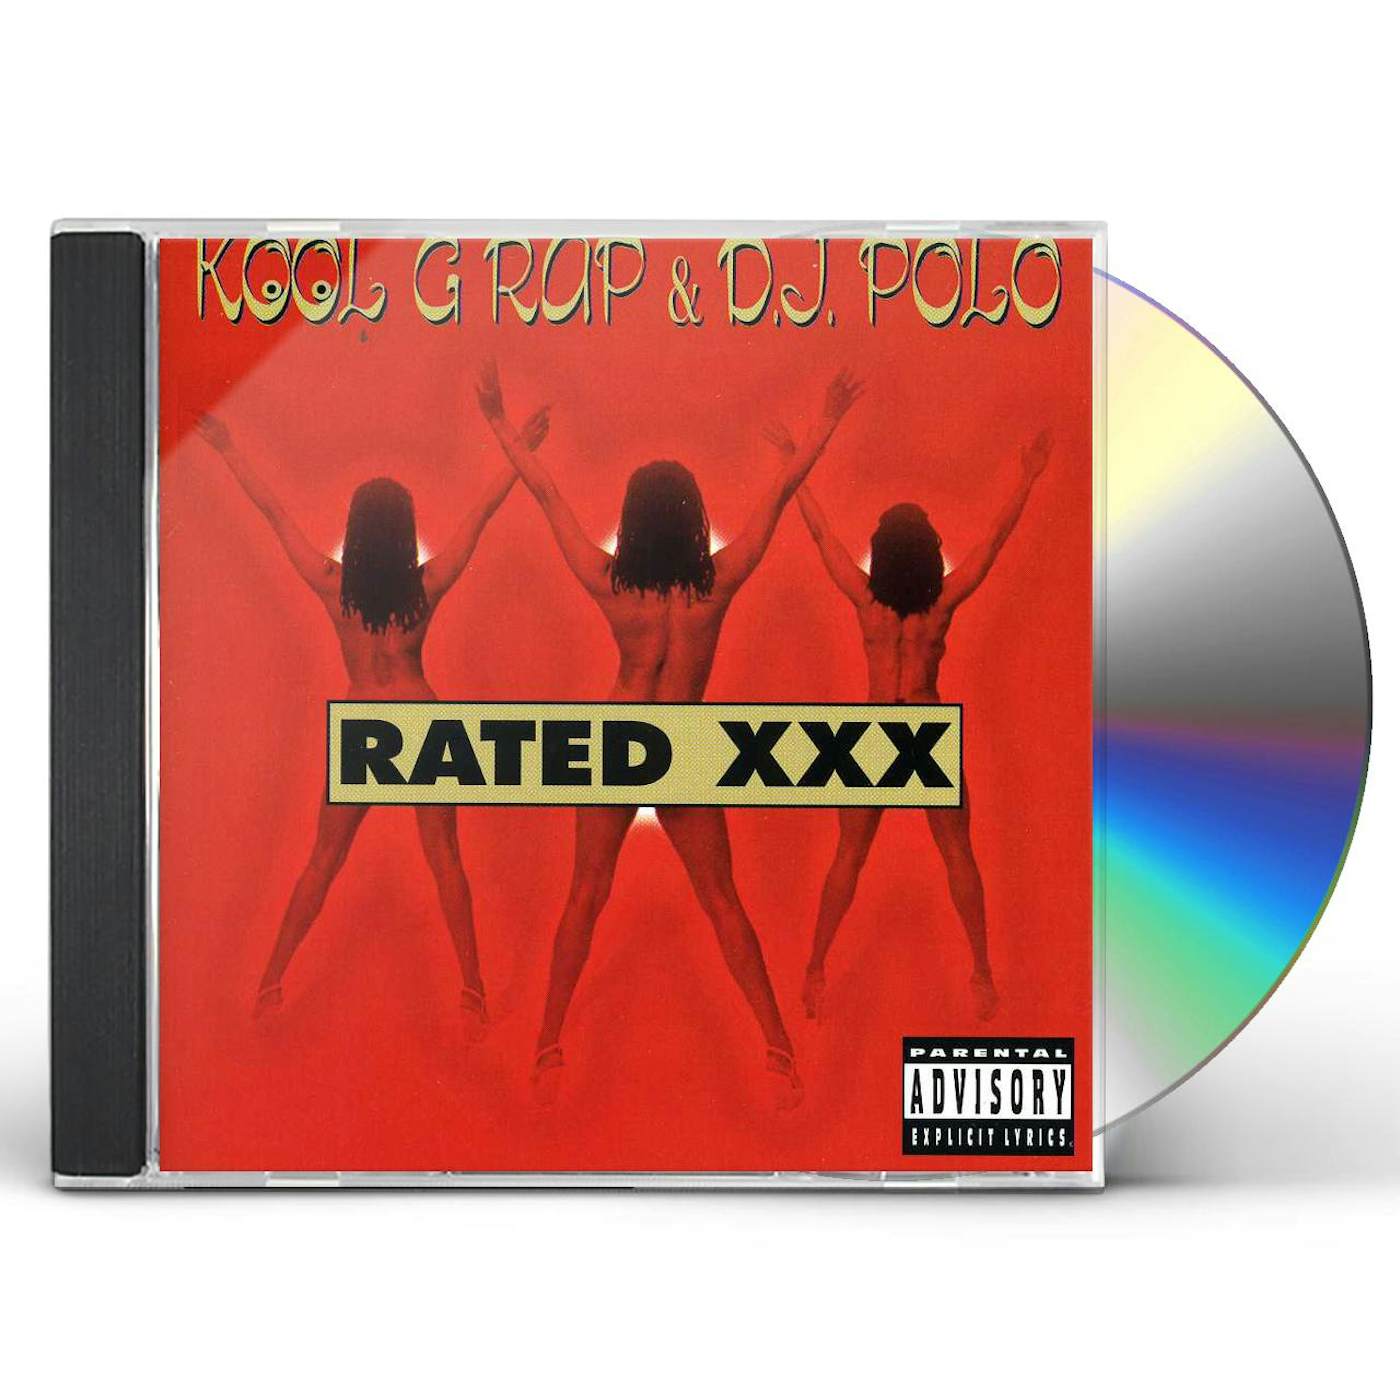 Kool G Rap & DJ Polo RATED XXX CD